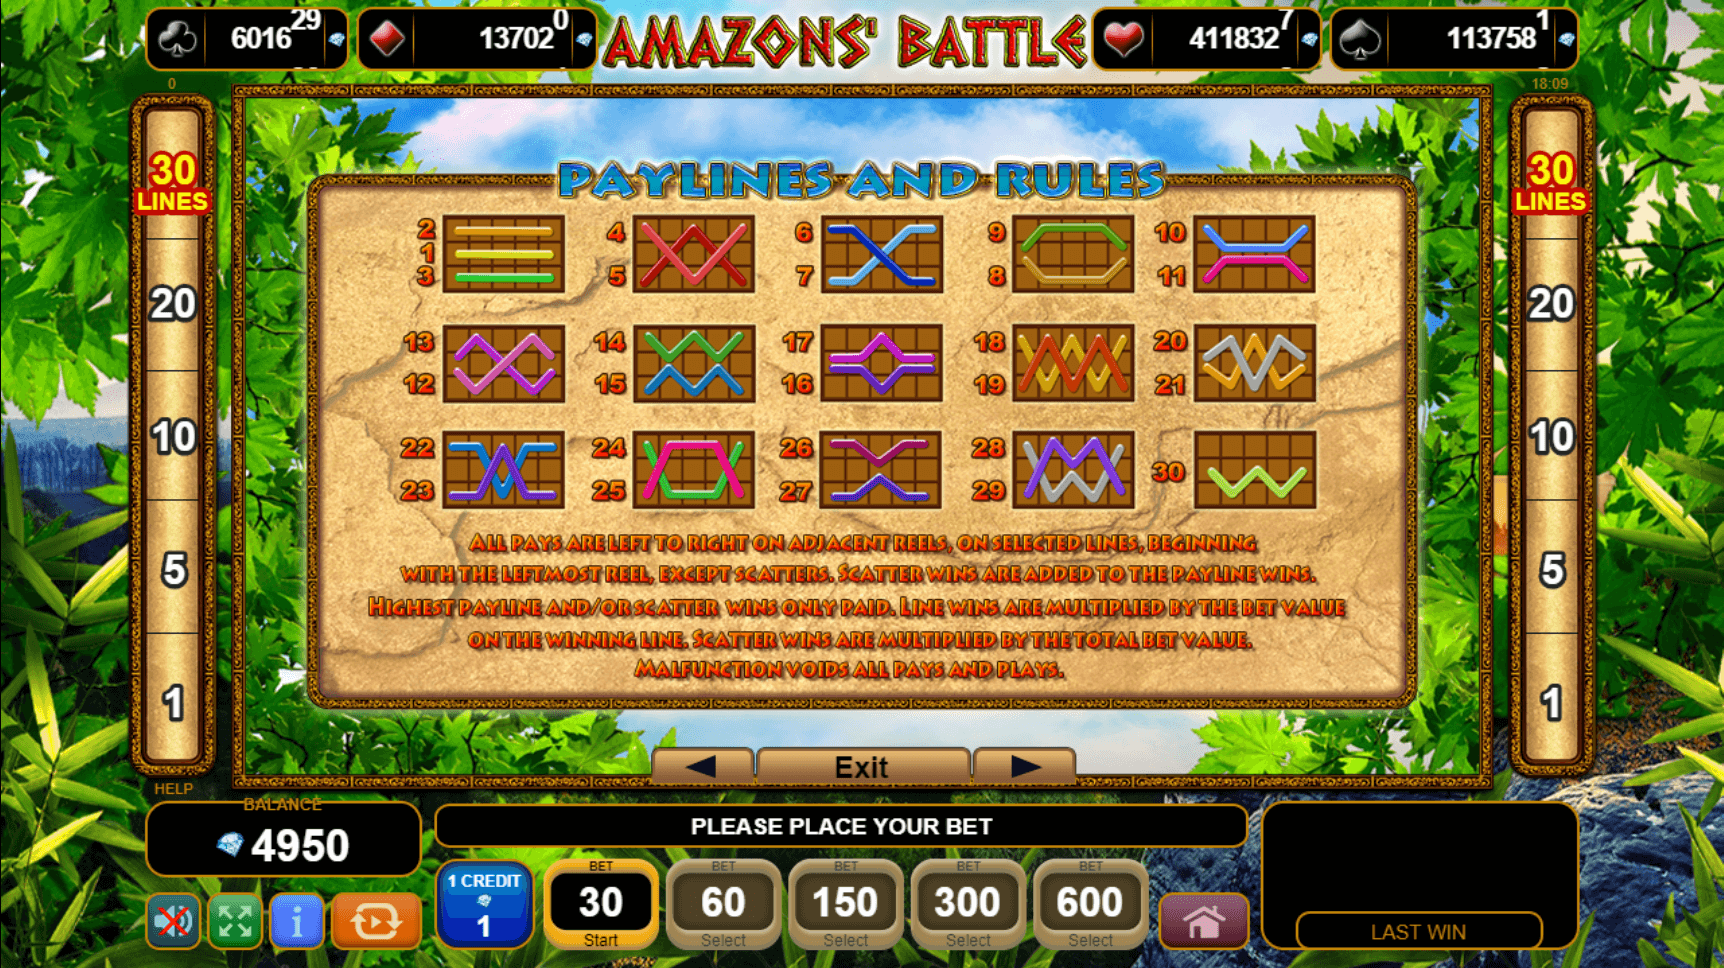 50 amazons battle slot machine detail image 0